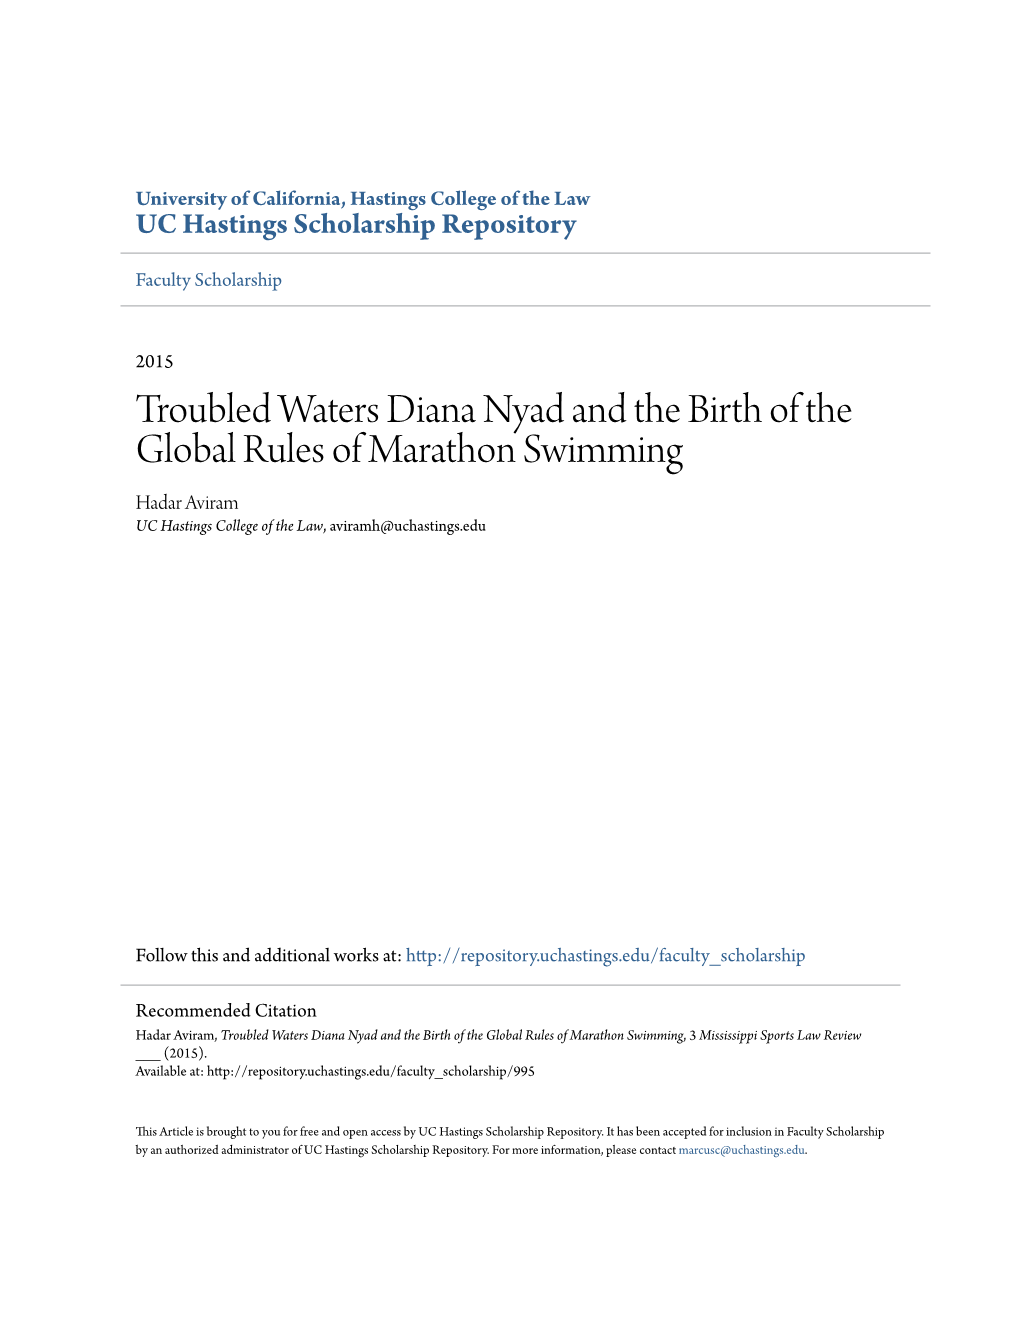 Troubled Waters Diana Nyad and the Birth of the Global Rules of Marathon Swimming Hadar Aviram UC Hastings College of the Law, Aviramh@Uchastings.Edu